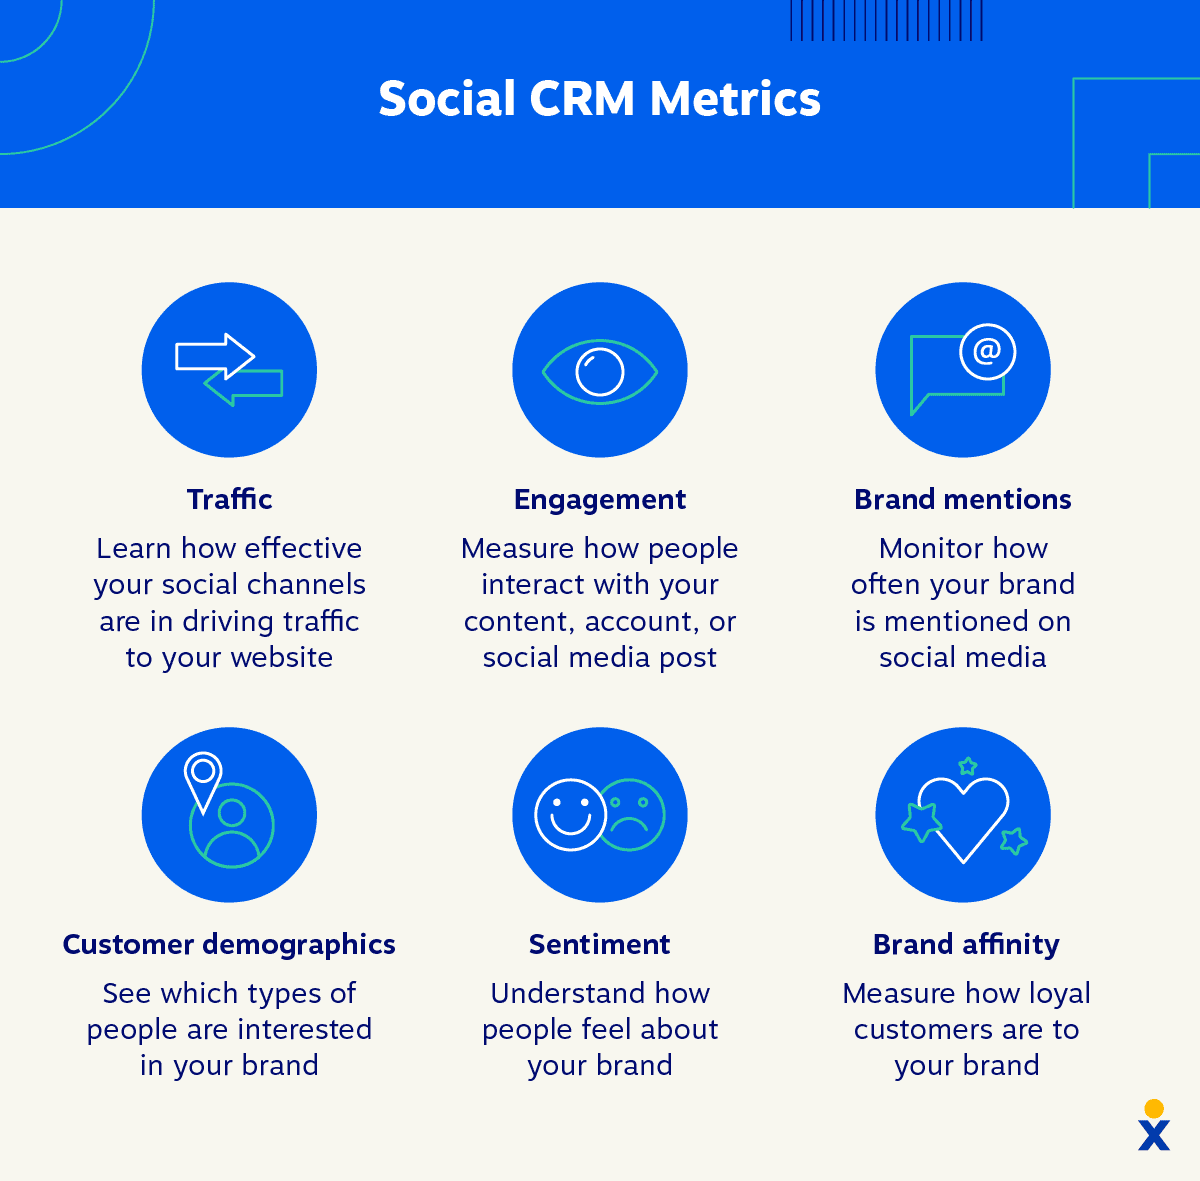 Icons highlight the descriptions of key social CRM metrics.